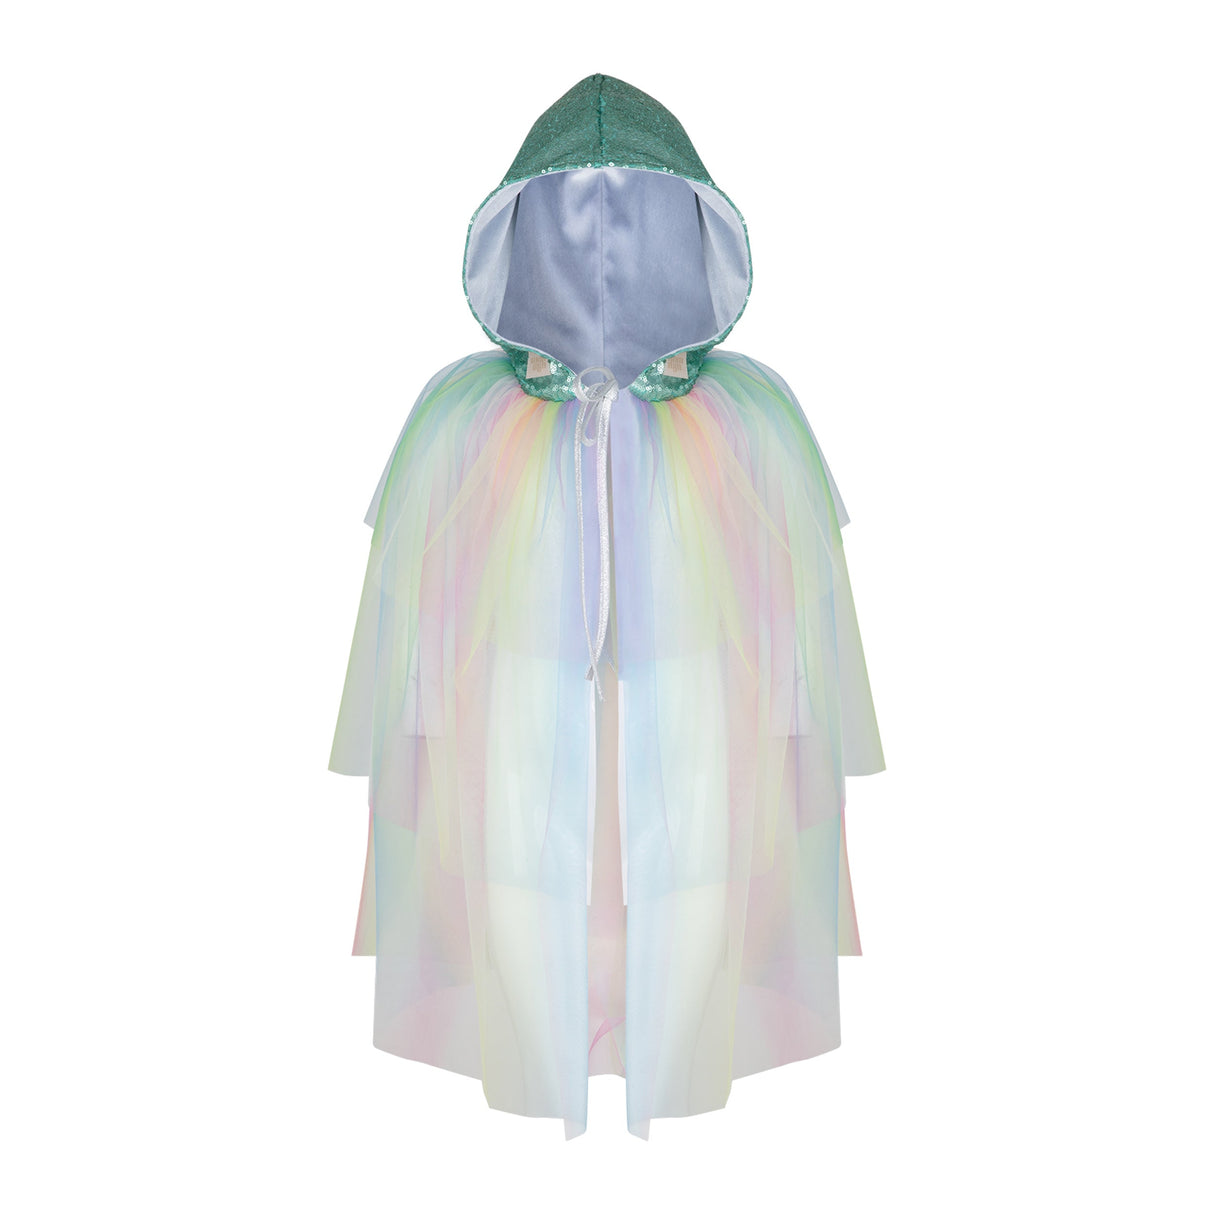 Magic Cape "Rainbow Fairy" by Moi Mili - Sumiye Co